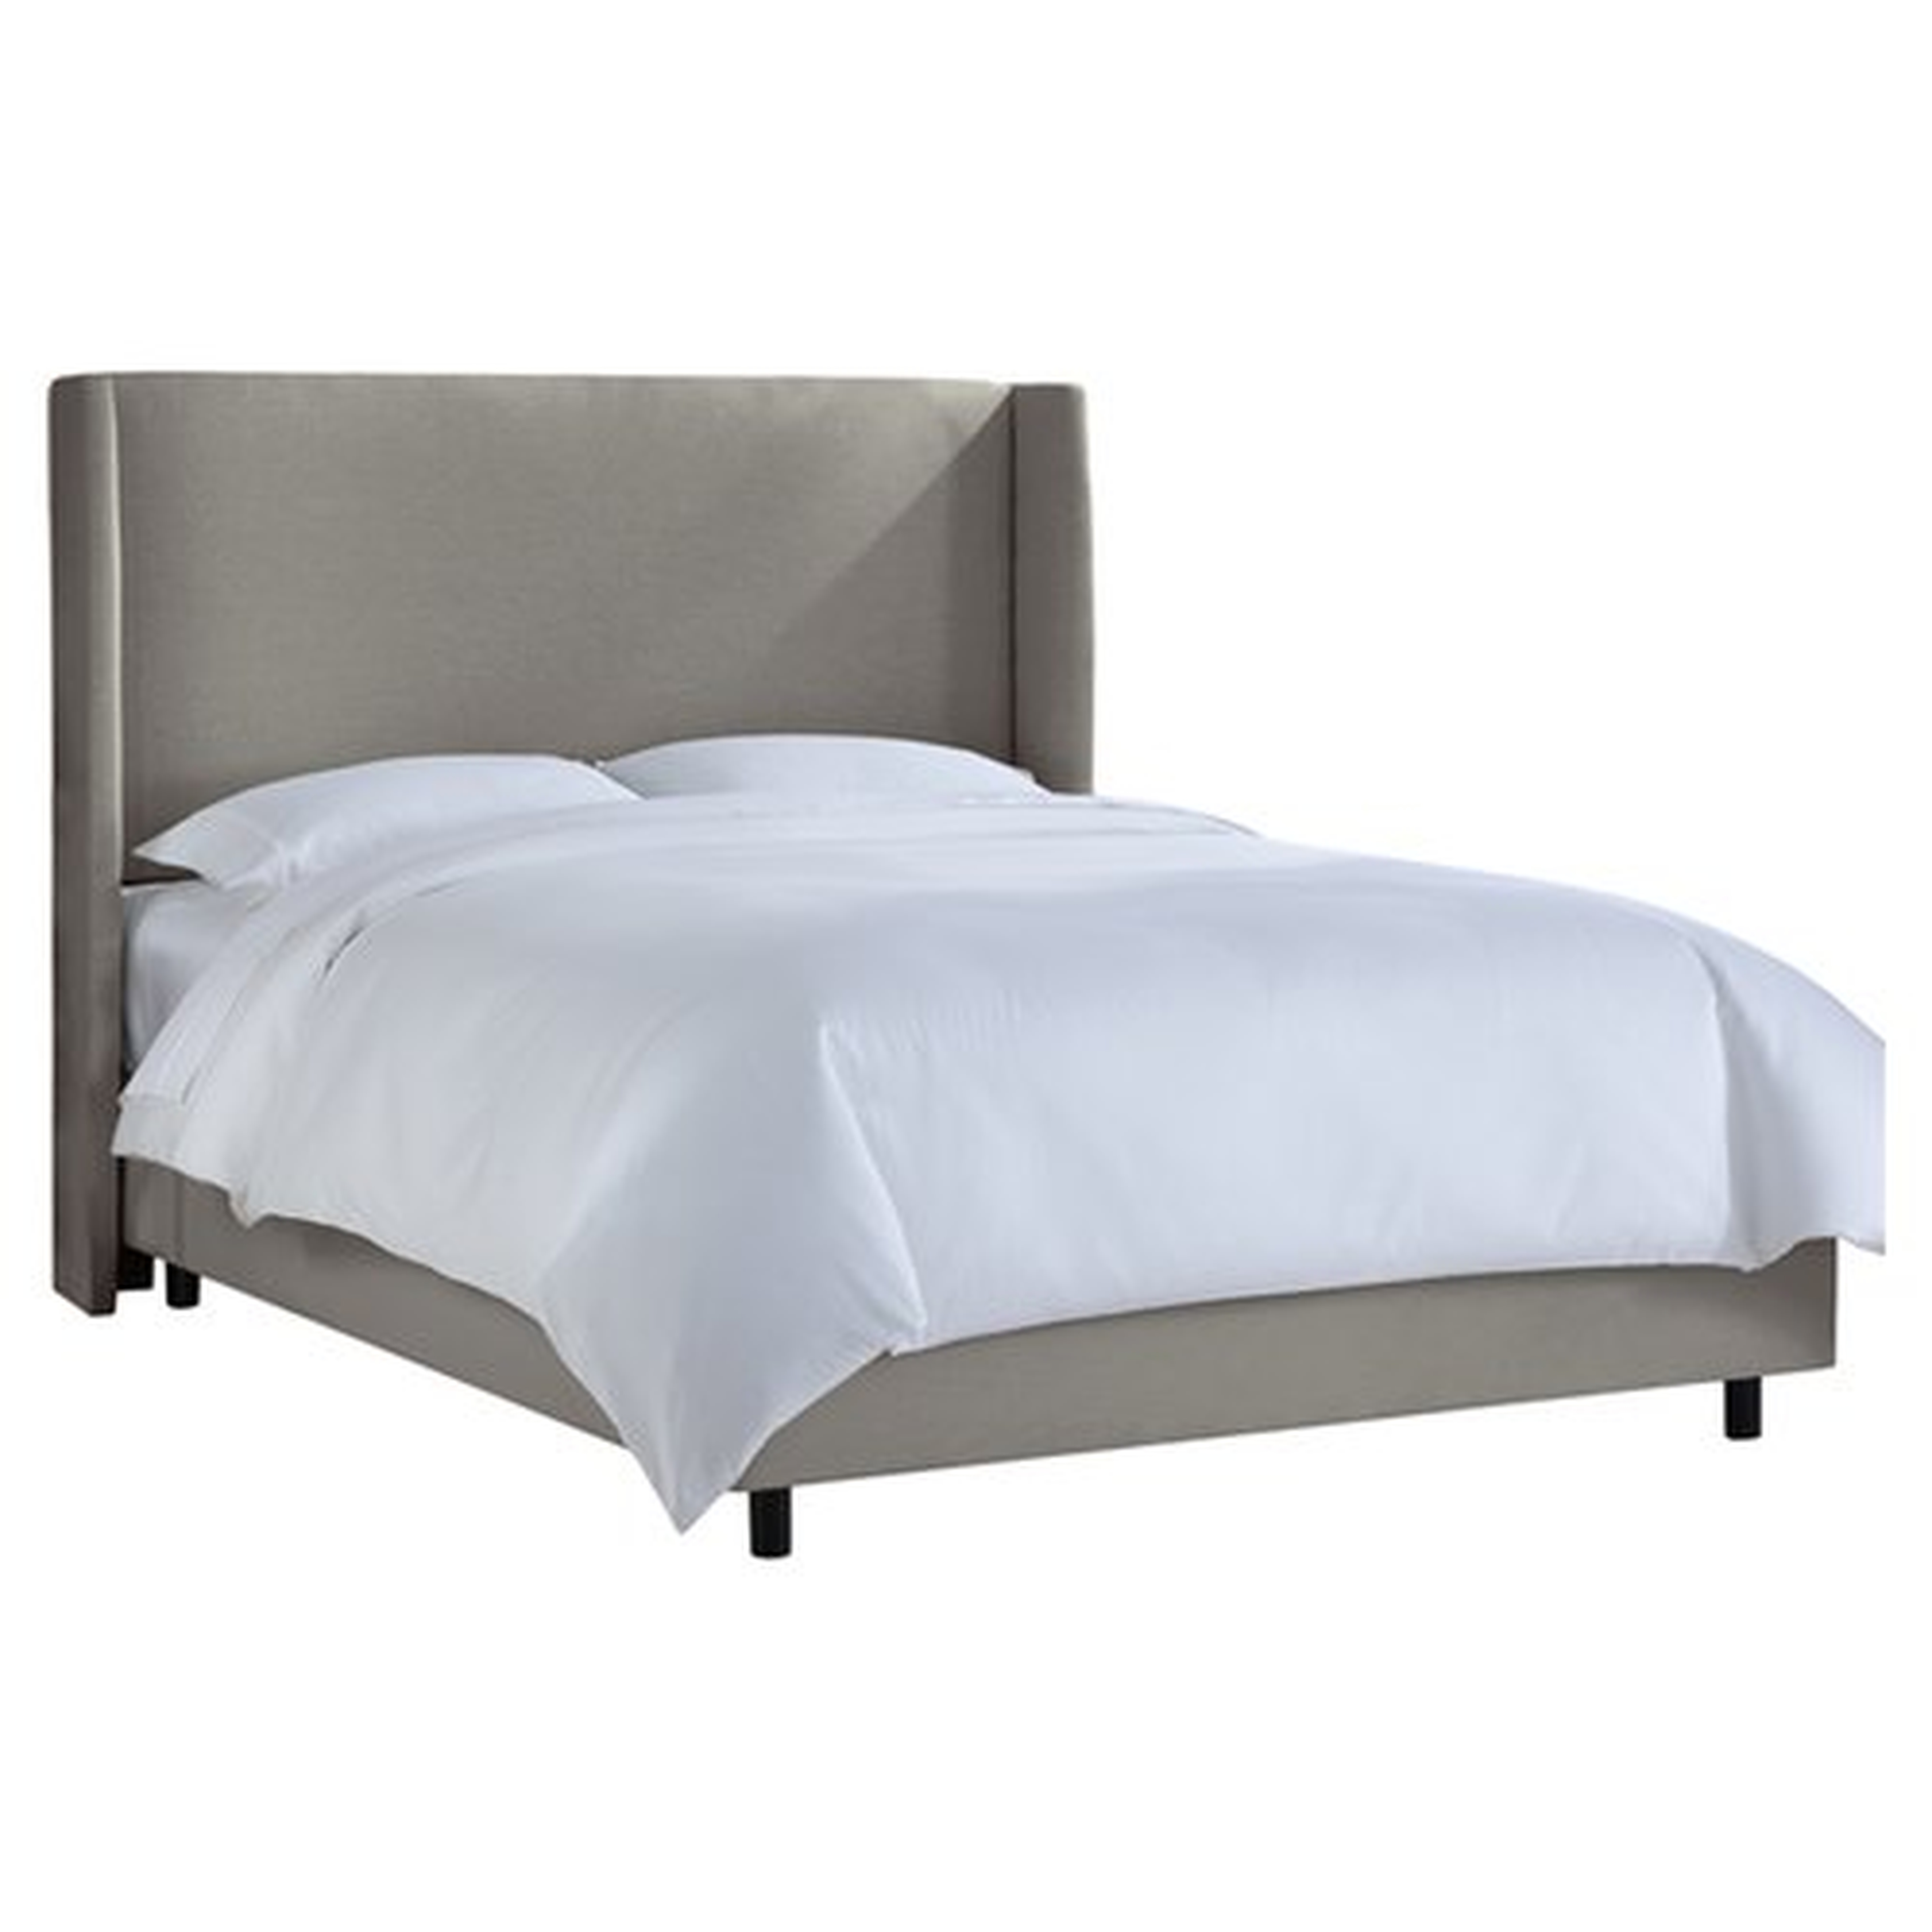 Alrai Upholstered Panel Bed - King, Poly-blend Gray - Wayfair